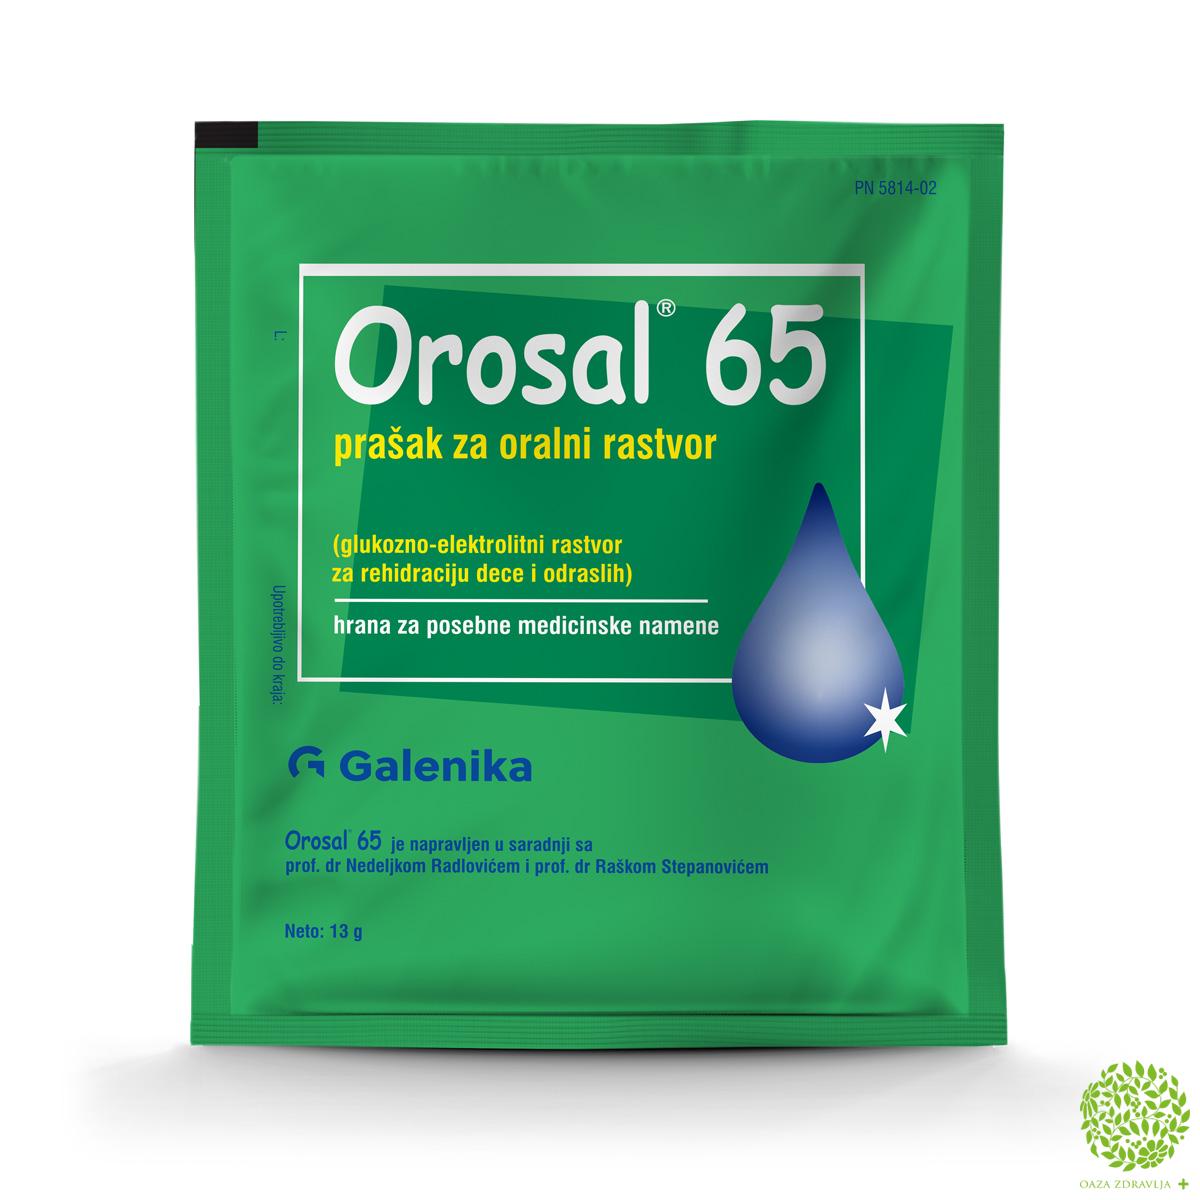 OROSAL 65 